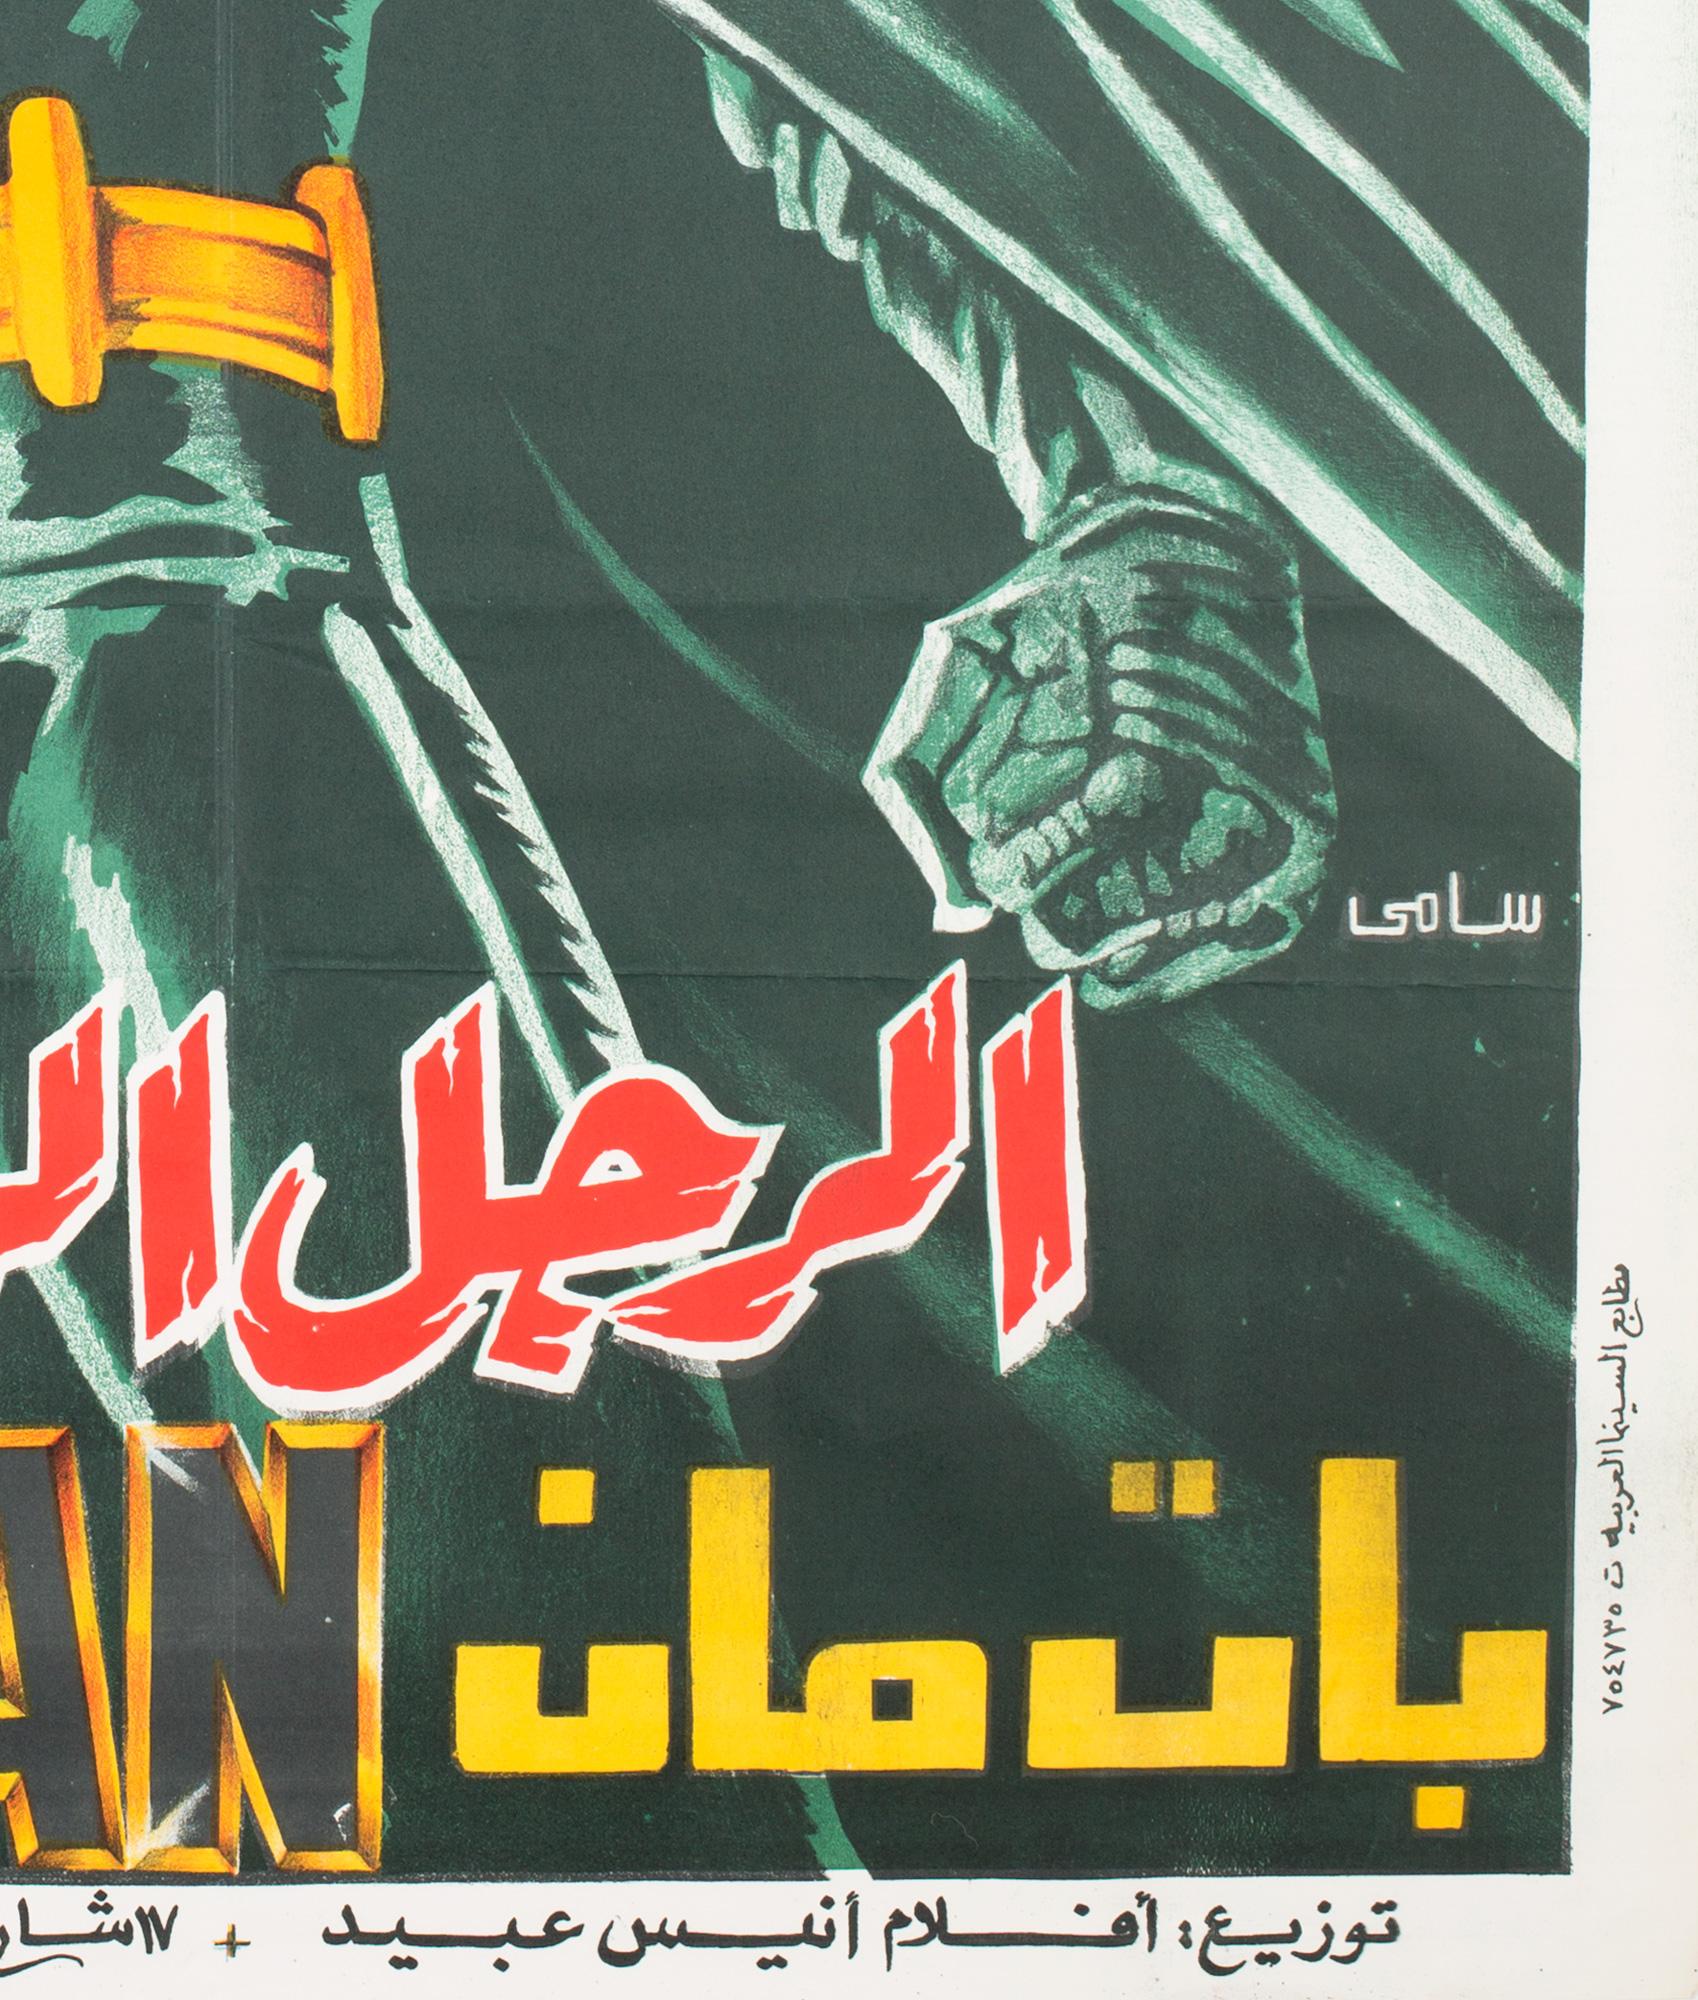 20th Century Batman Original Egyptian Film Movie Poster, 1989